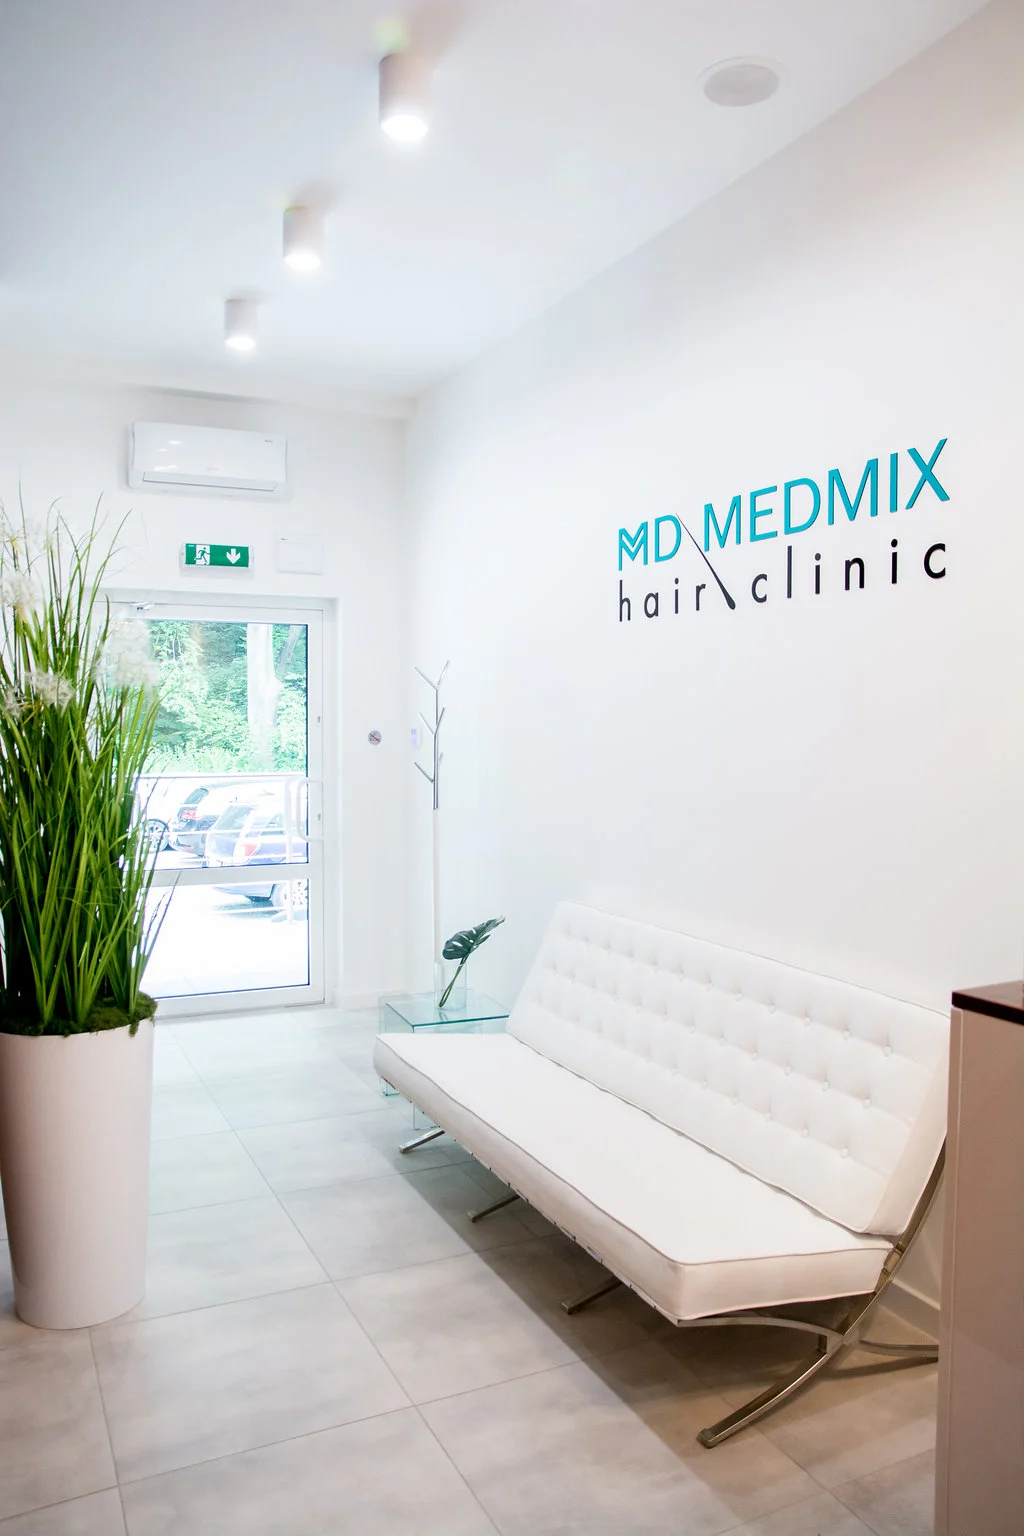 MedMix Hair Clinic Waiting Room